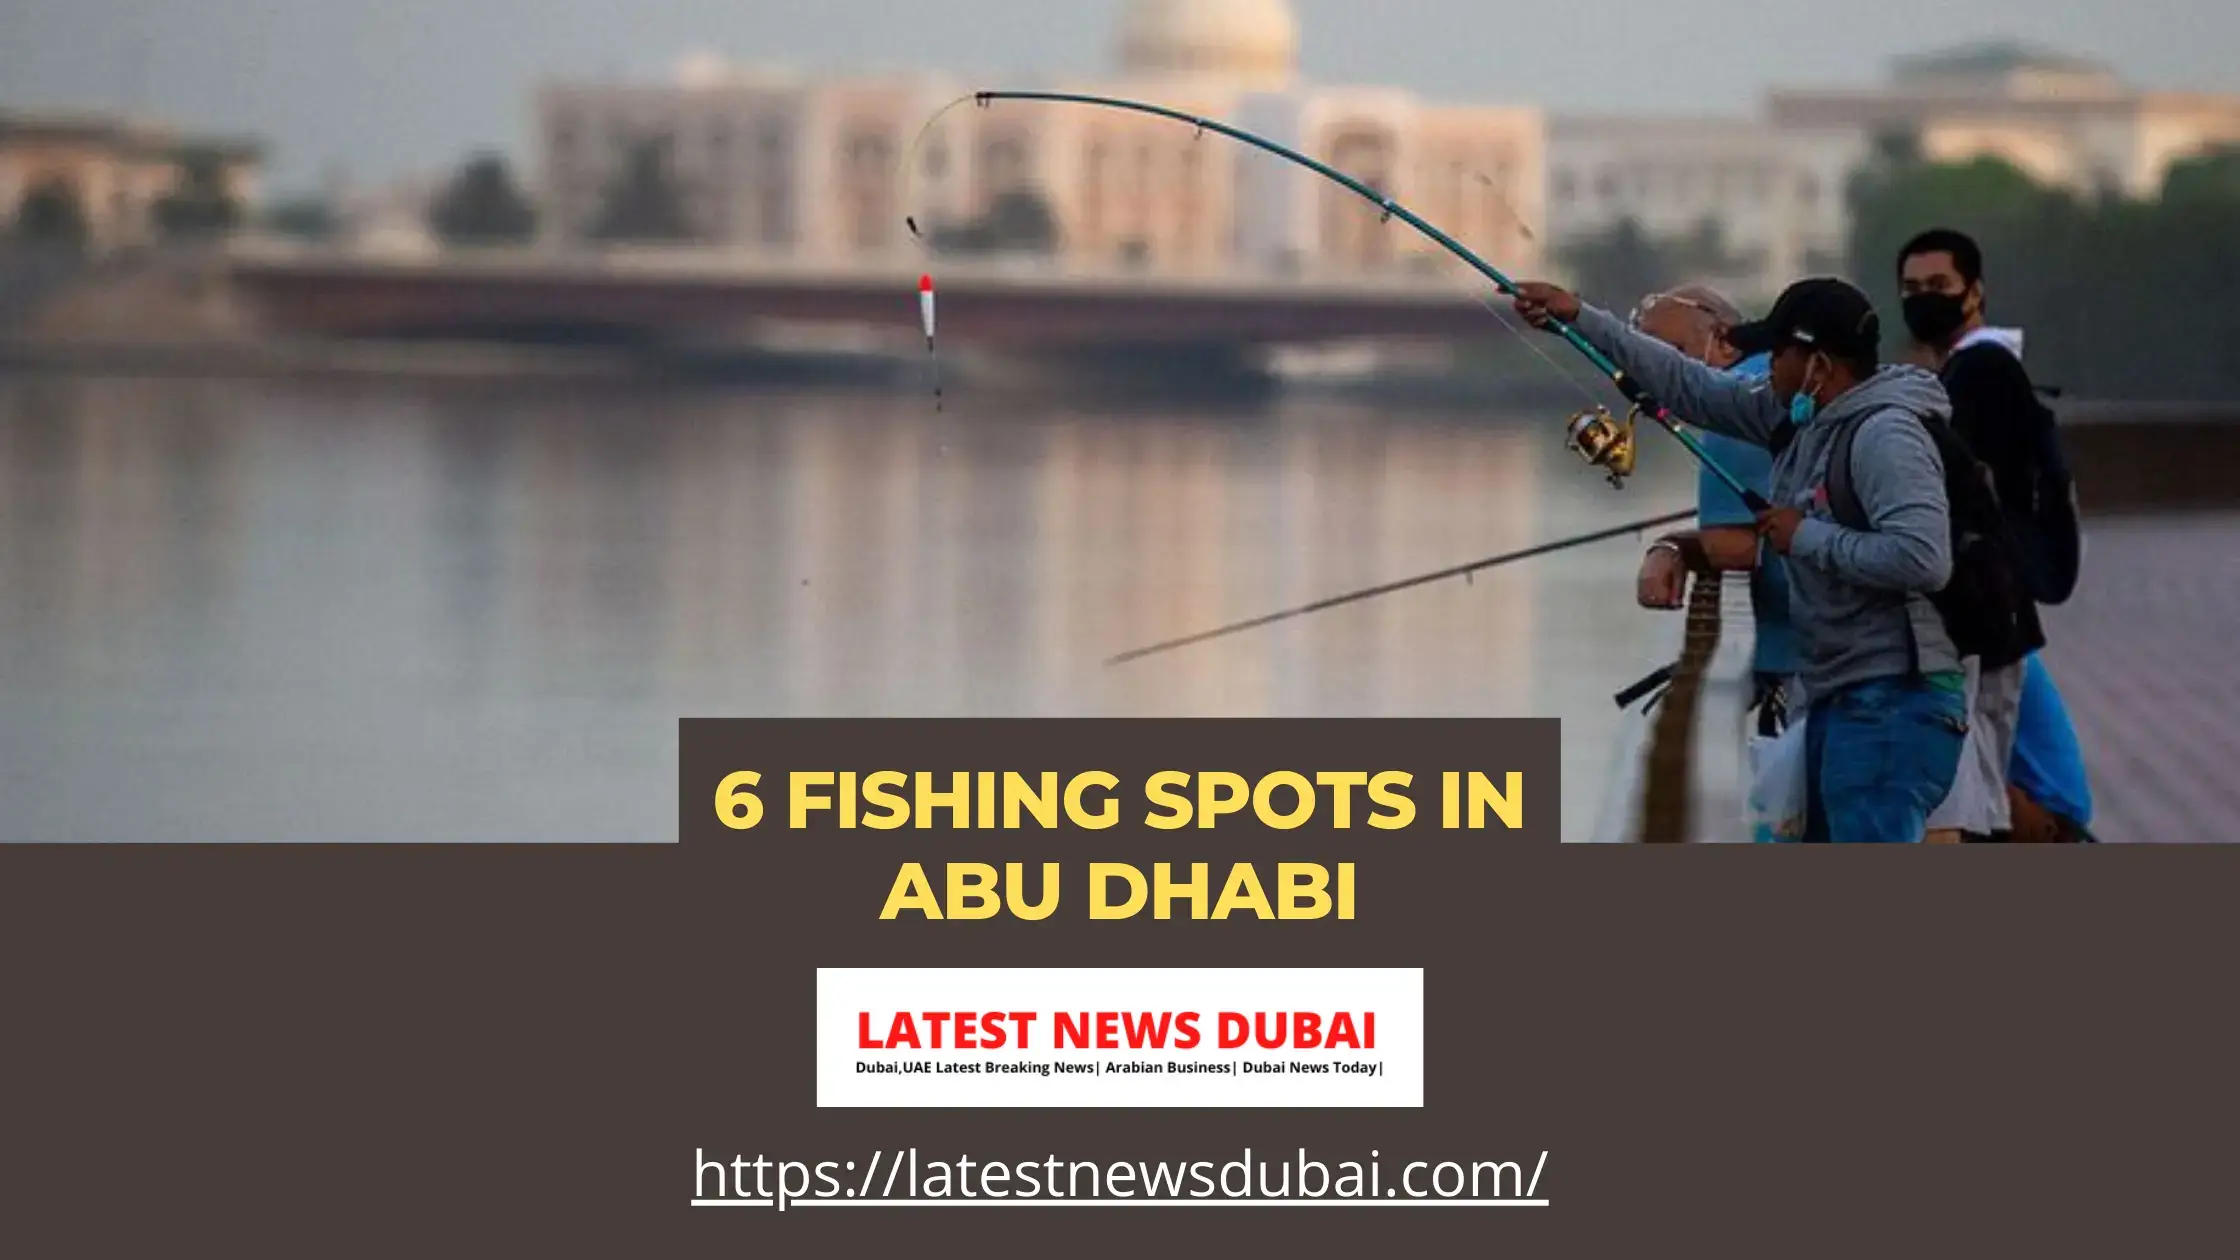 Fishing spots in Abu Dhabi